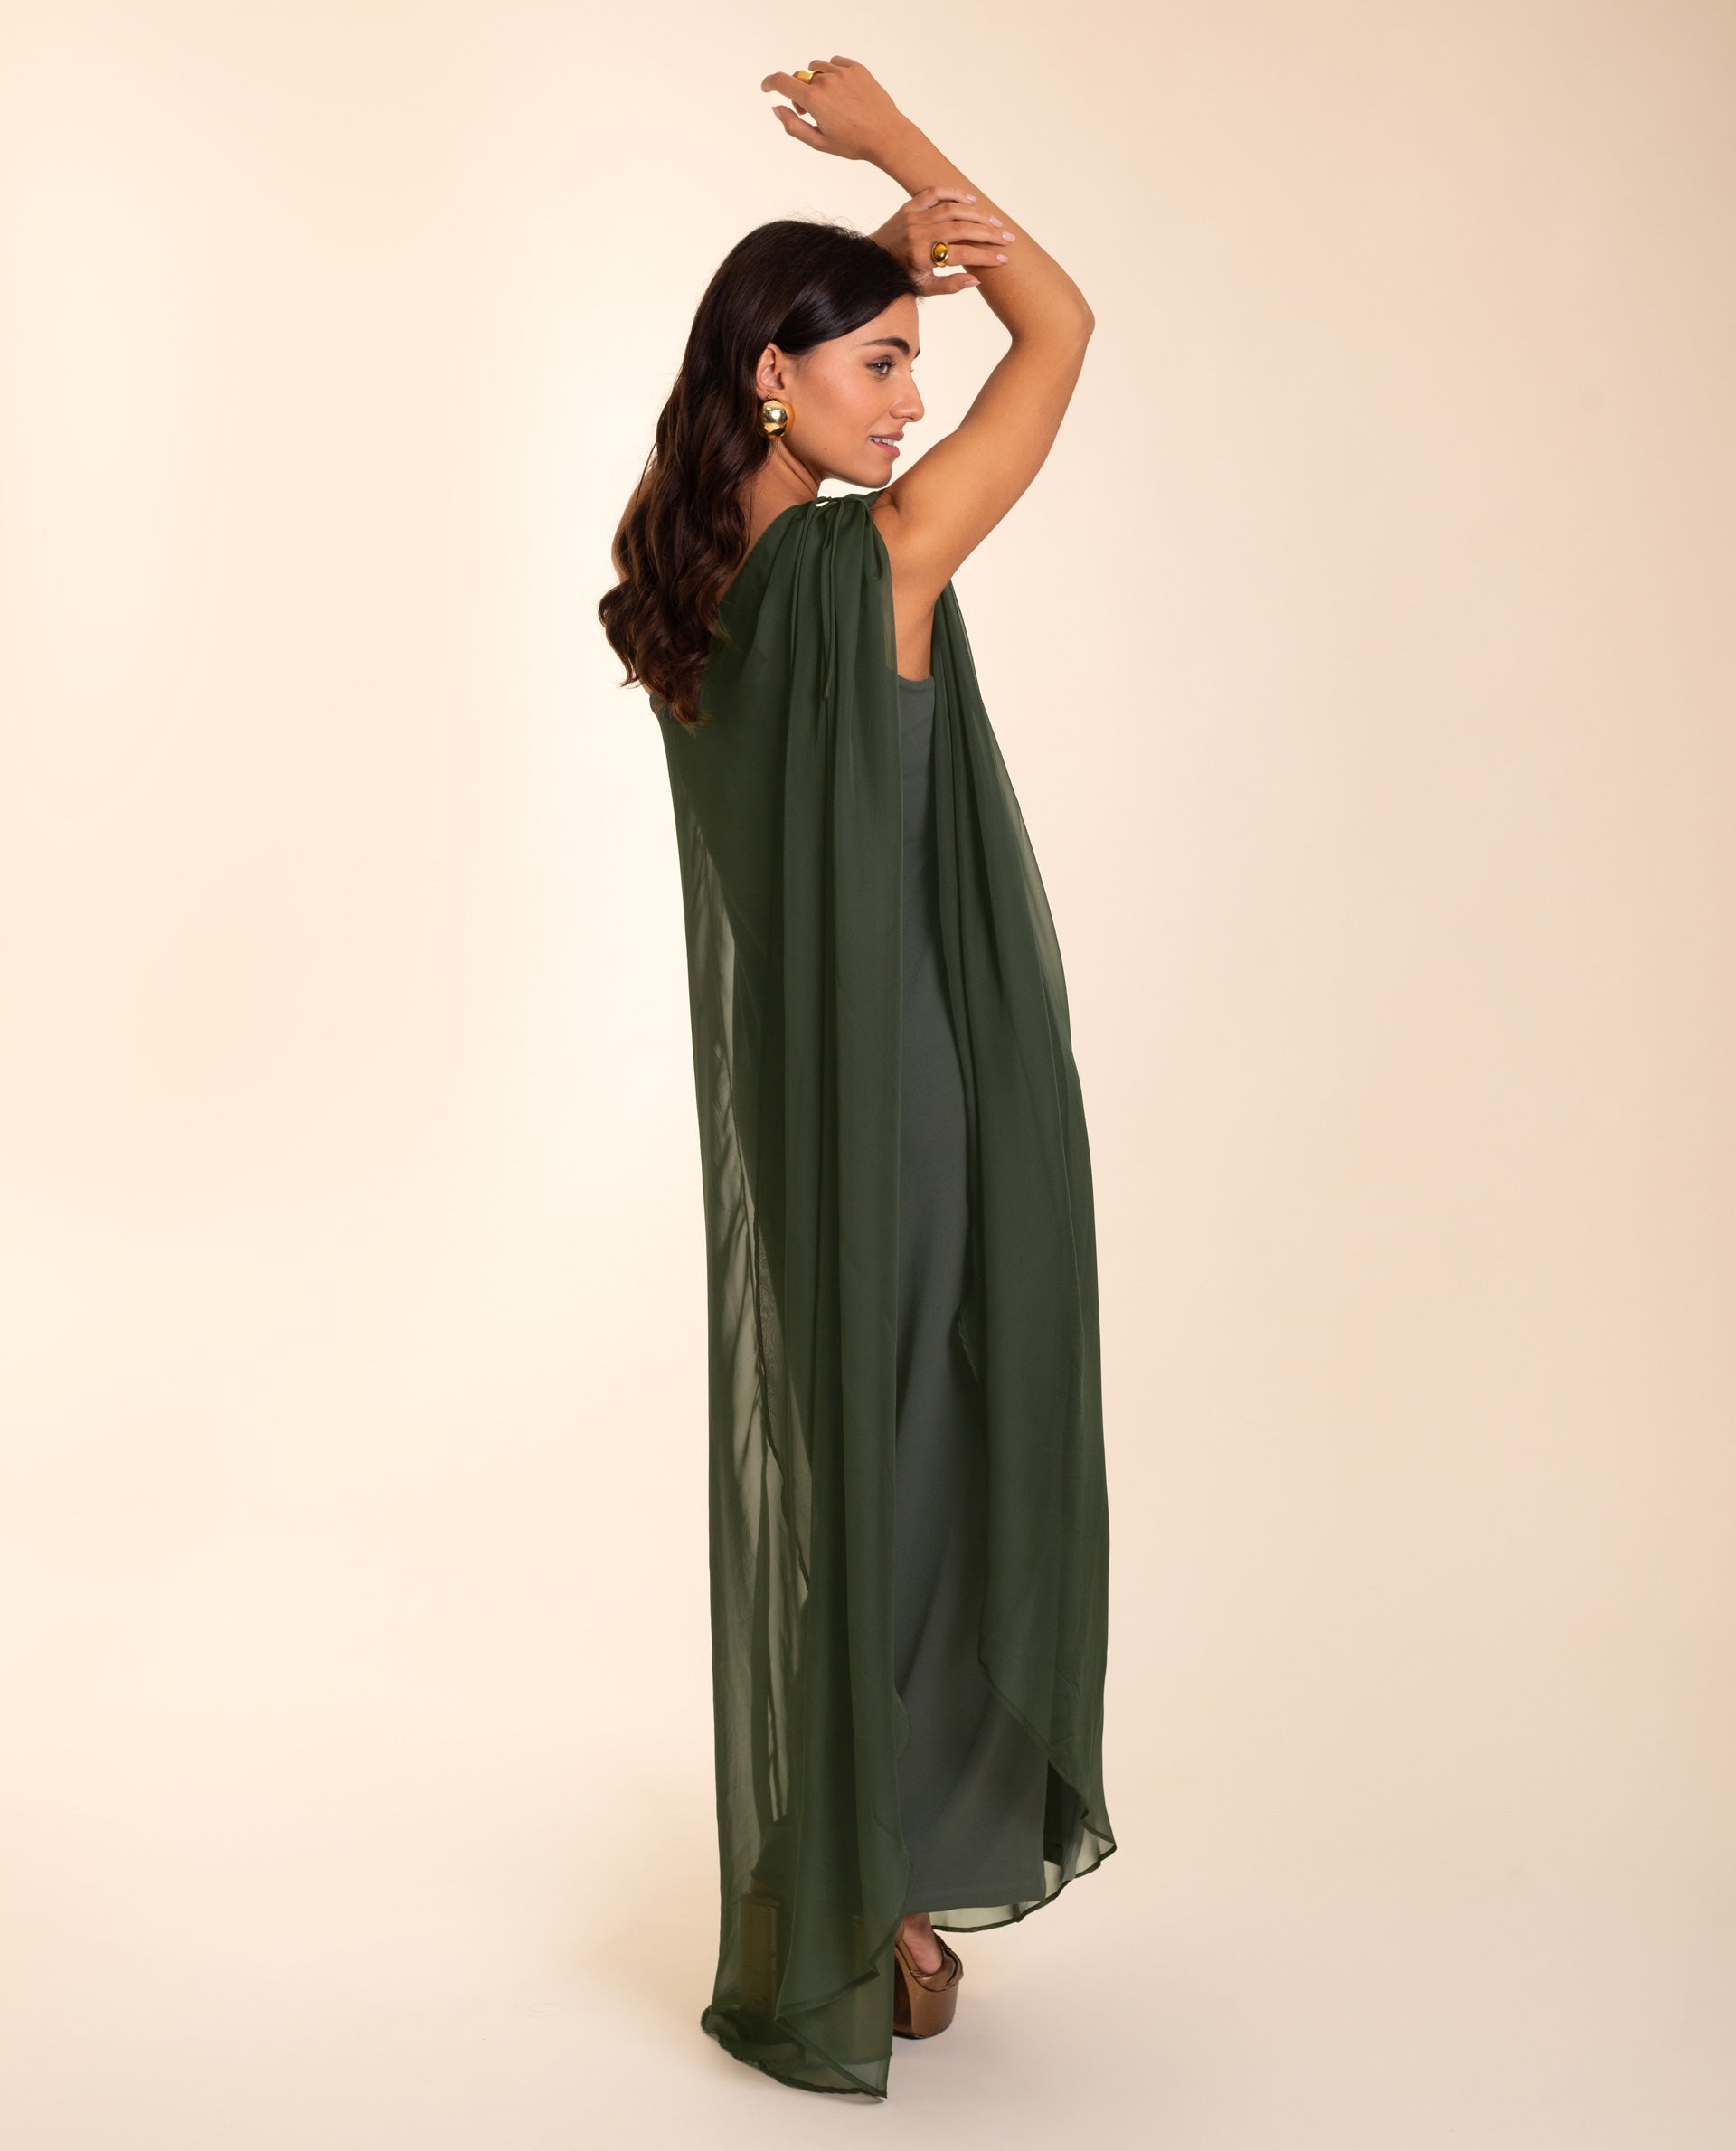 VESTIDO MRS. RIVERA | Vestido Larg Vestido Largo Fluido Verde Elegante | Invitadas THE-ARE